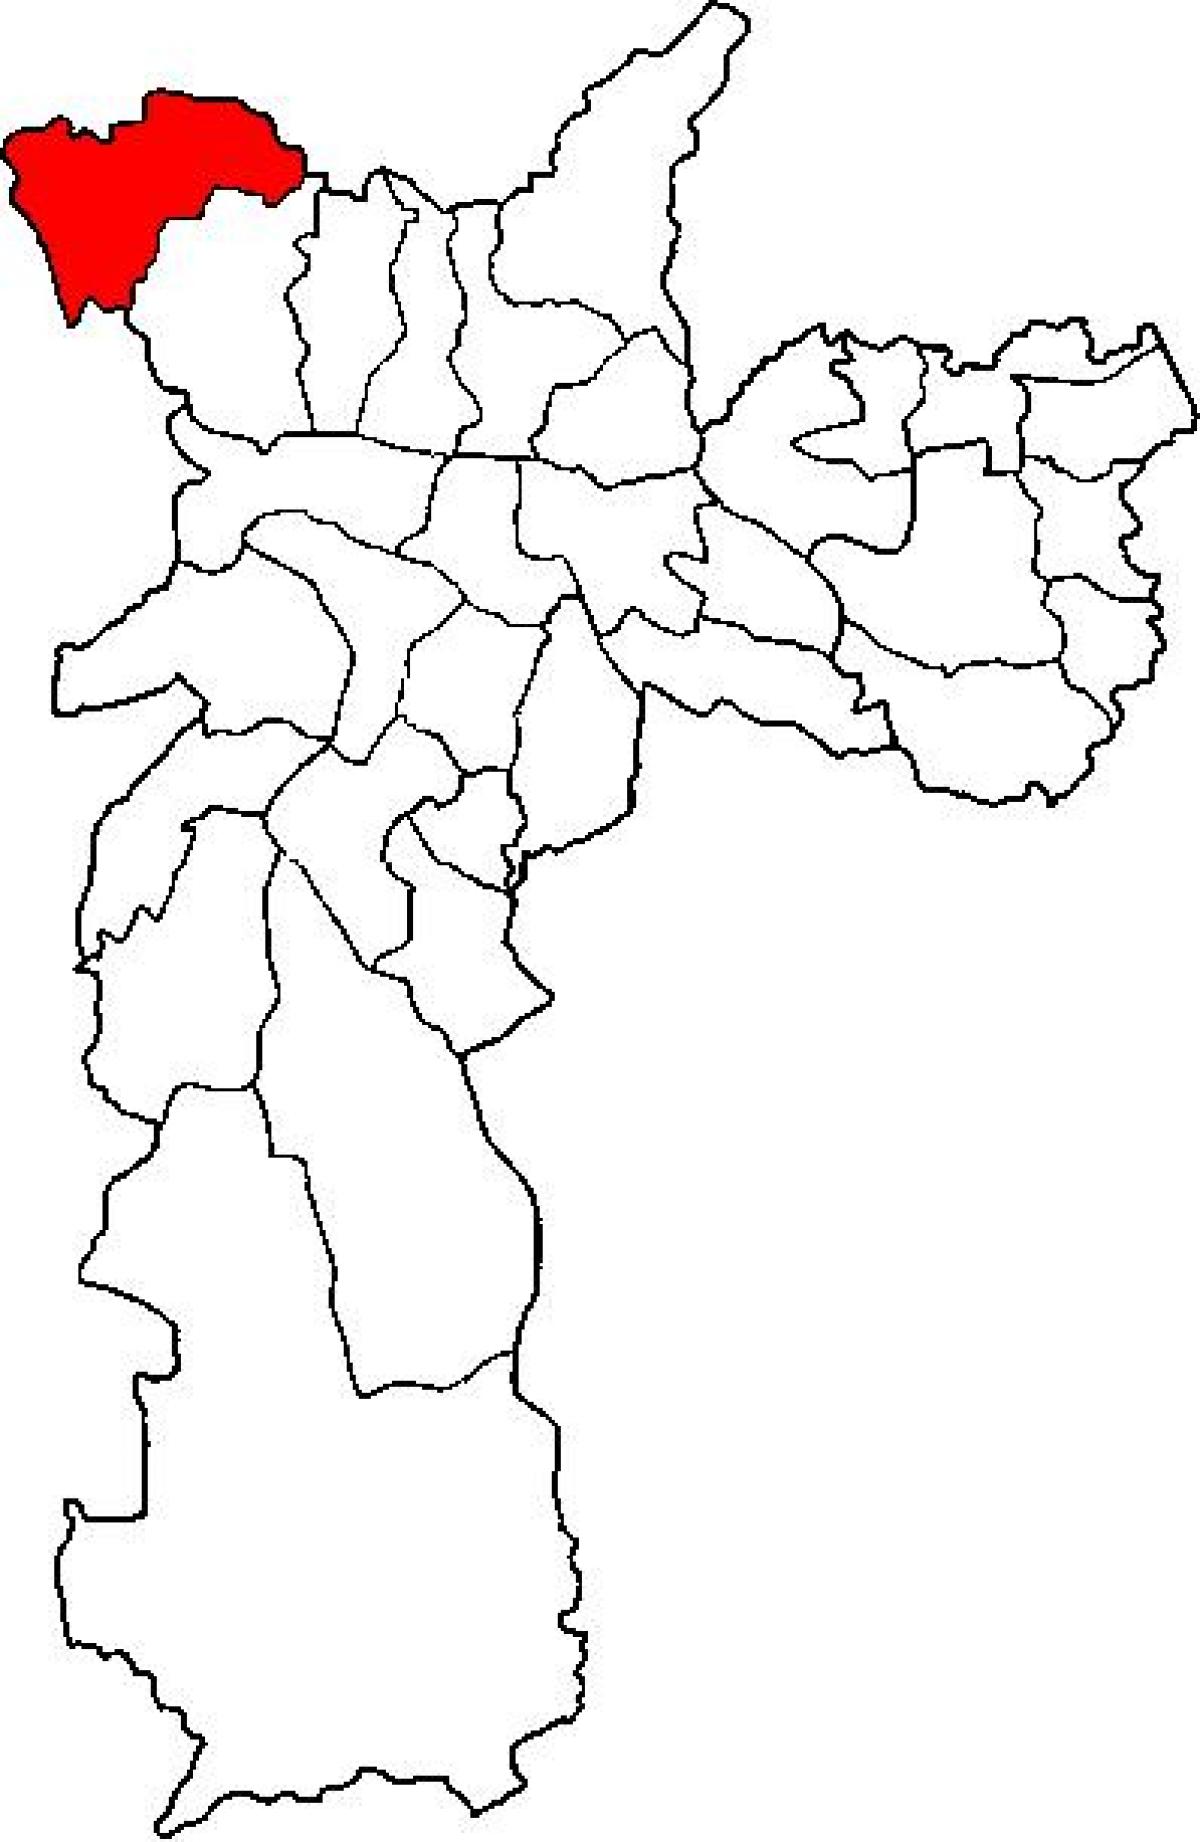 नक्शे के पेरुस उप-प्रान्त साओ पाउलो